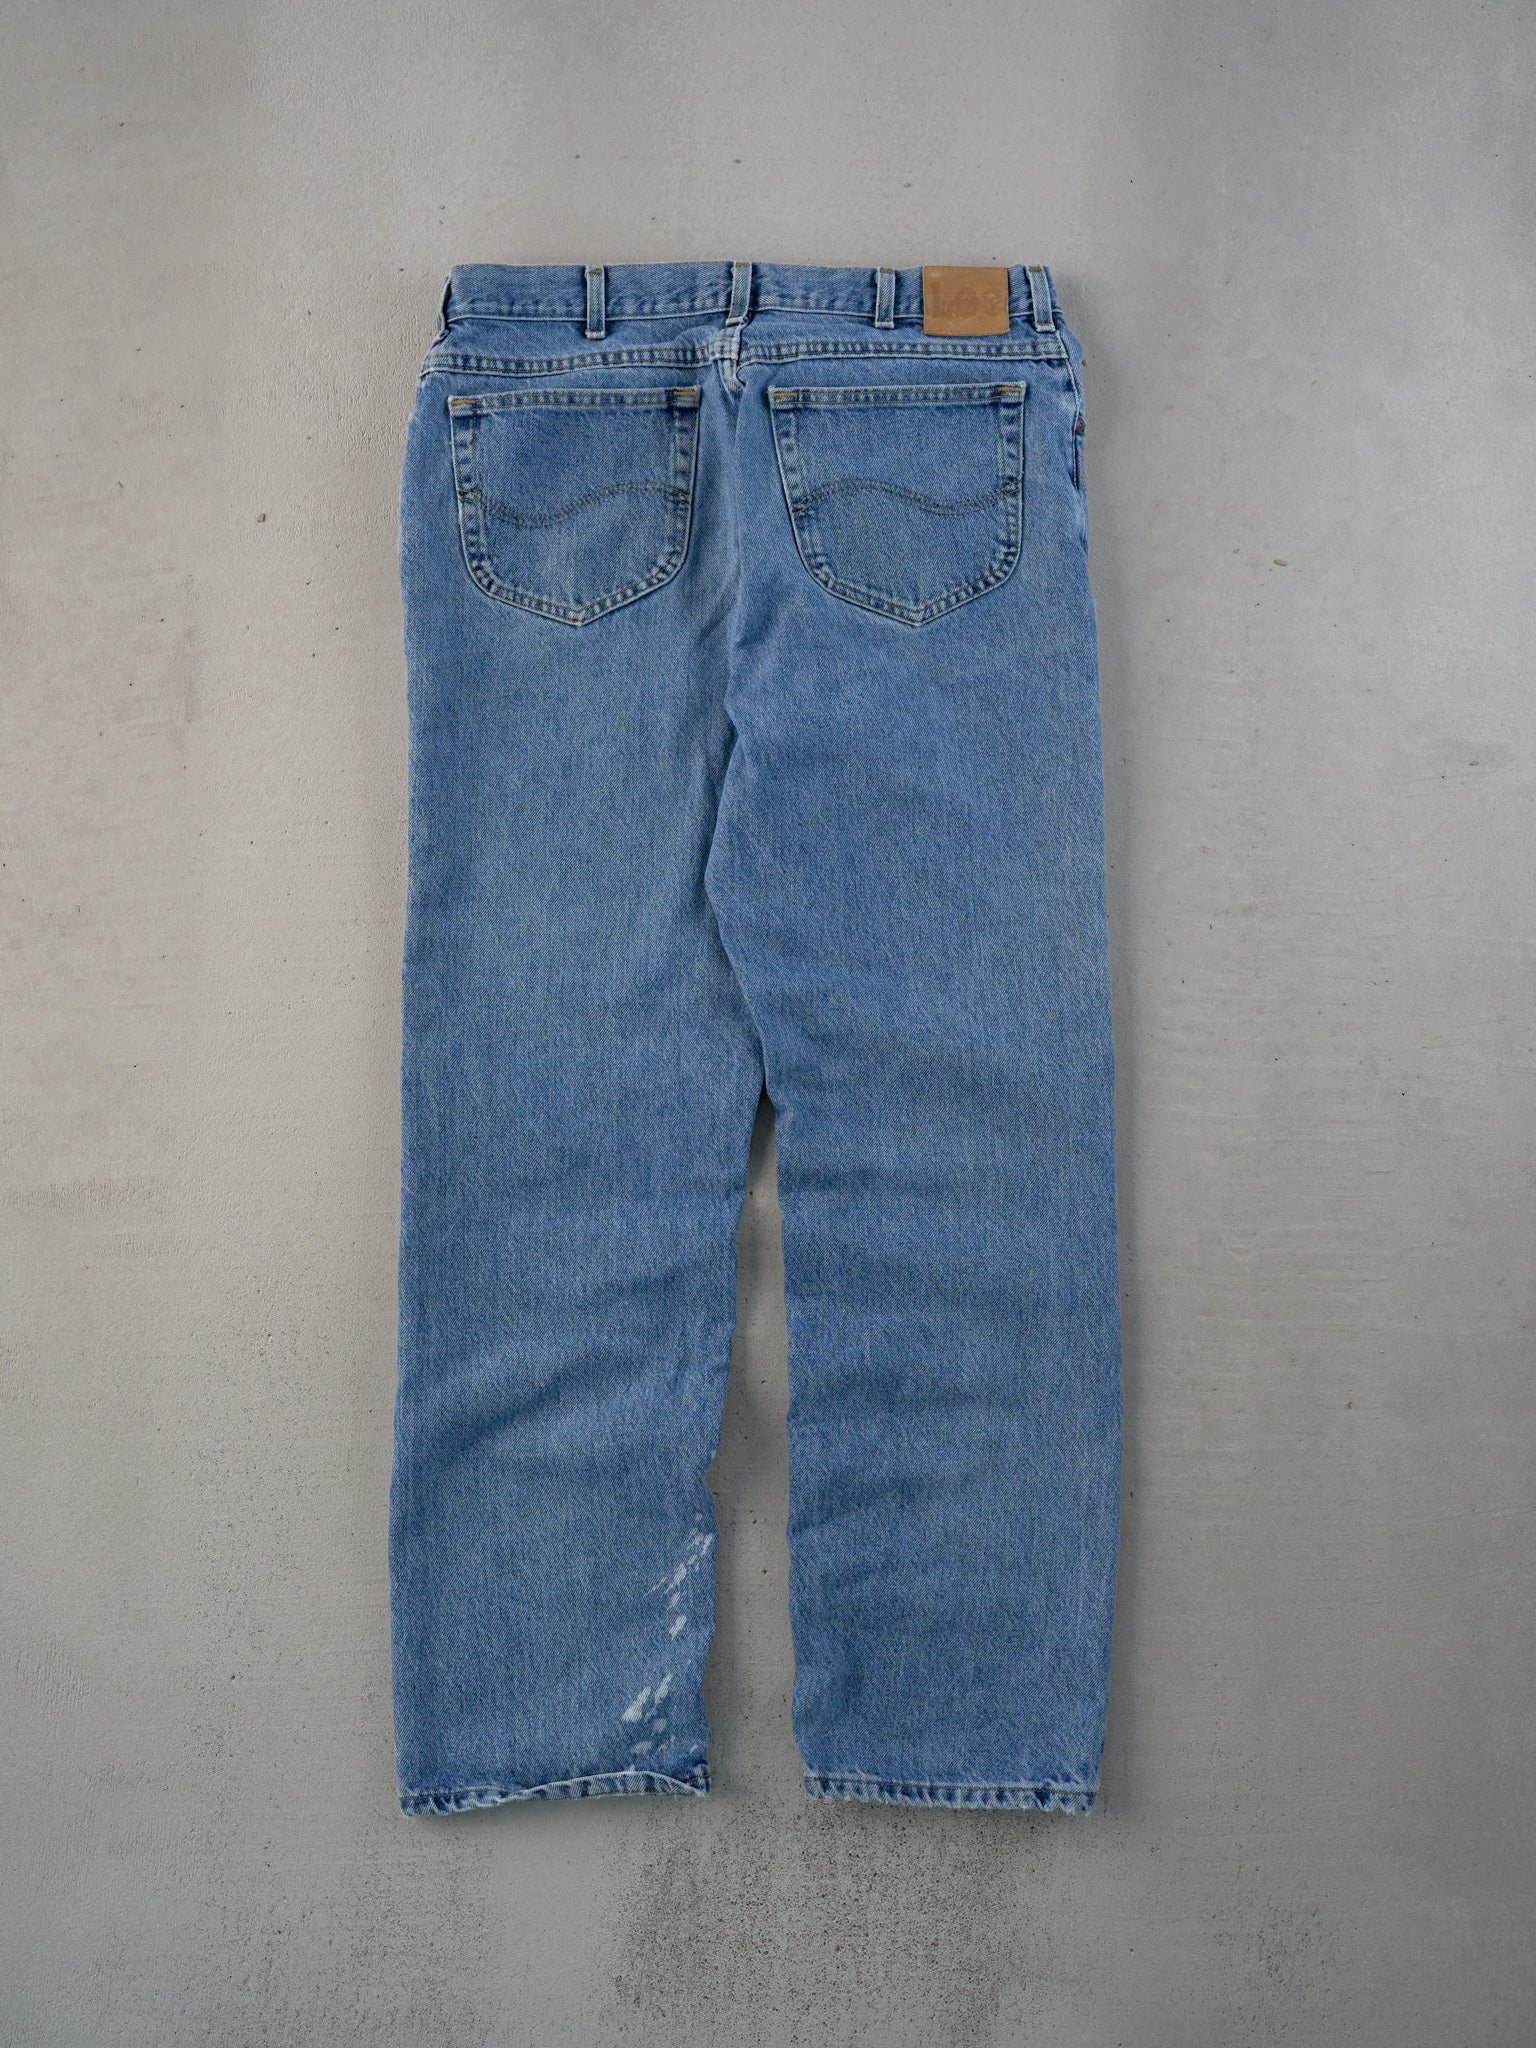 Vintage 90s Blue Lee Denim Jeans (35x31)